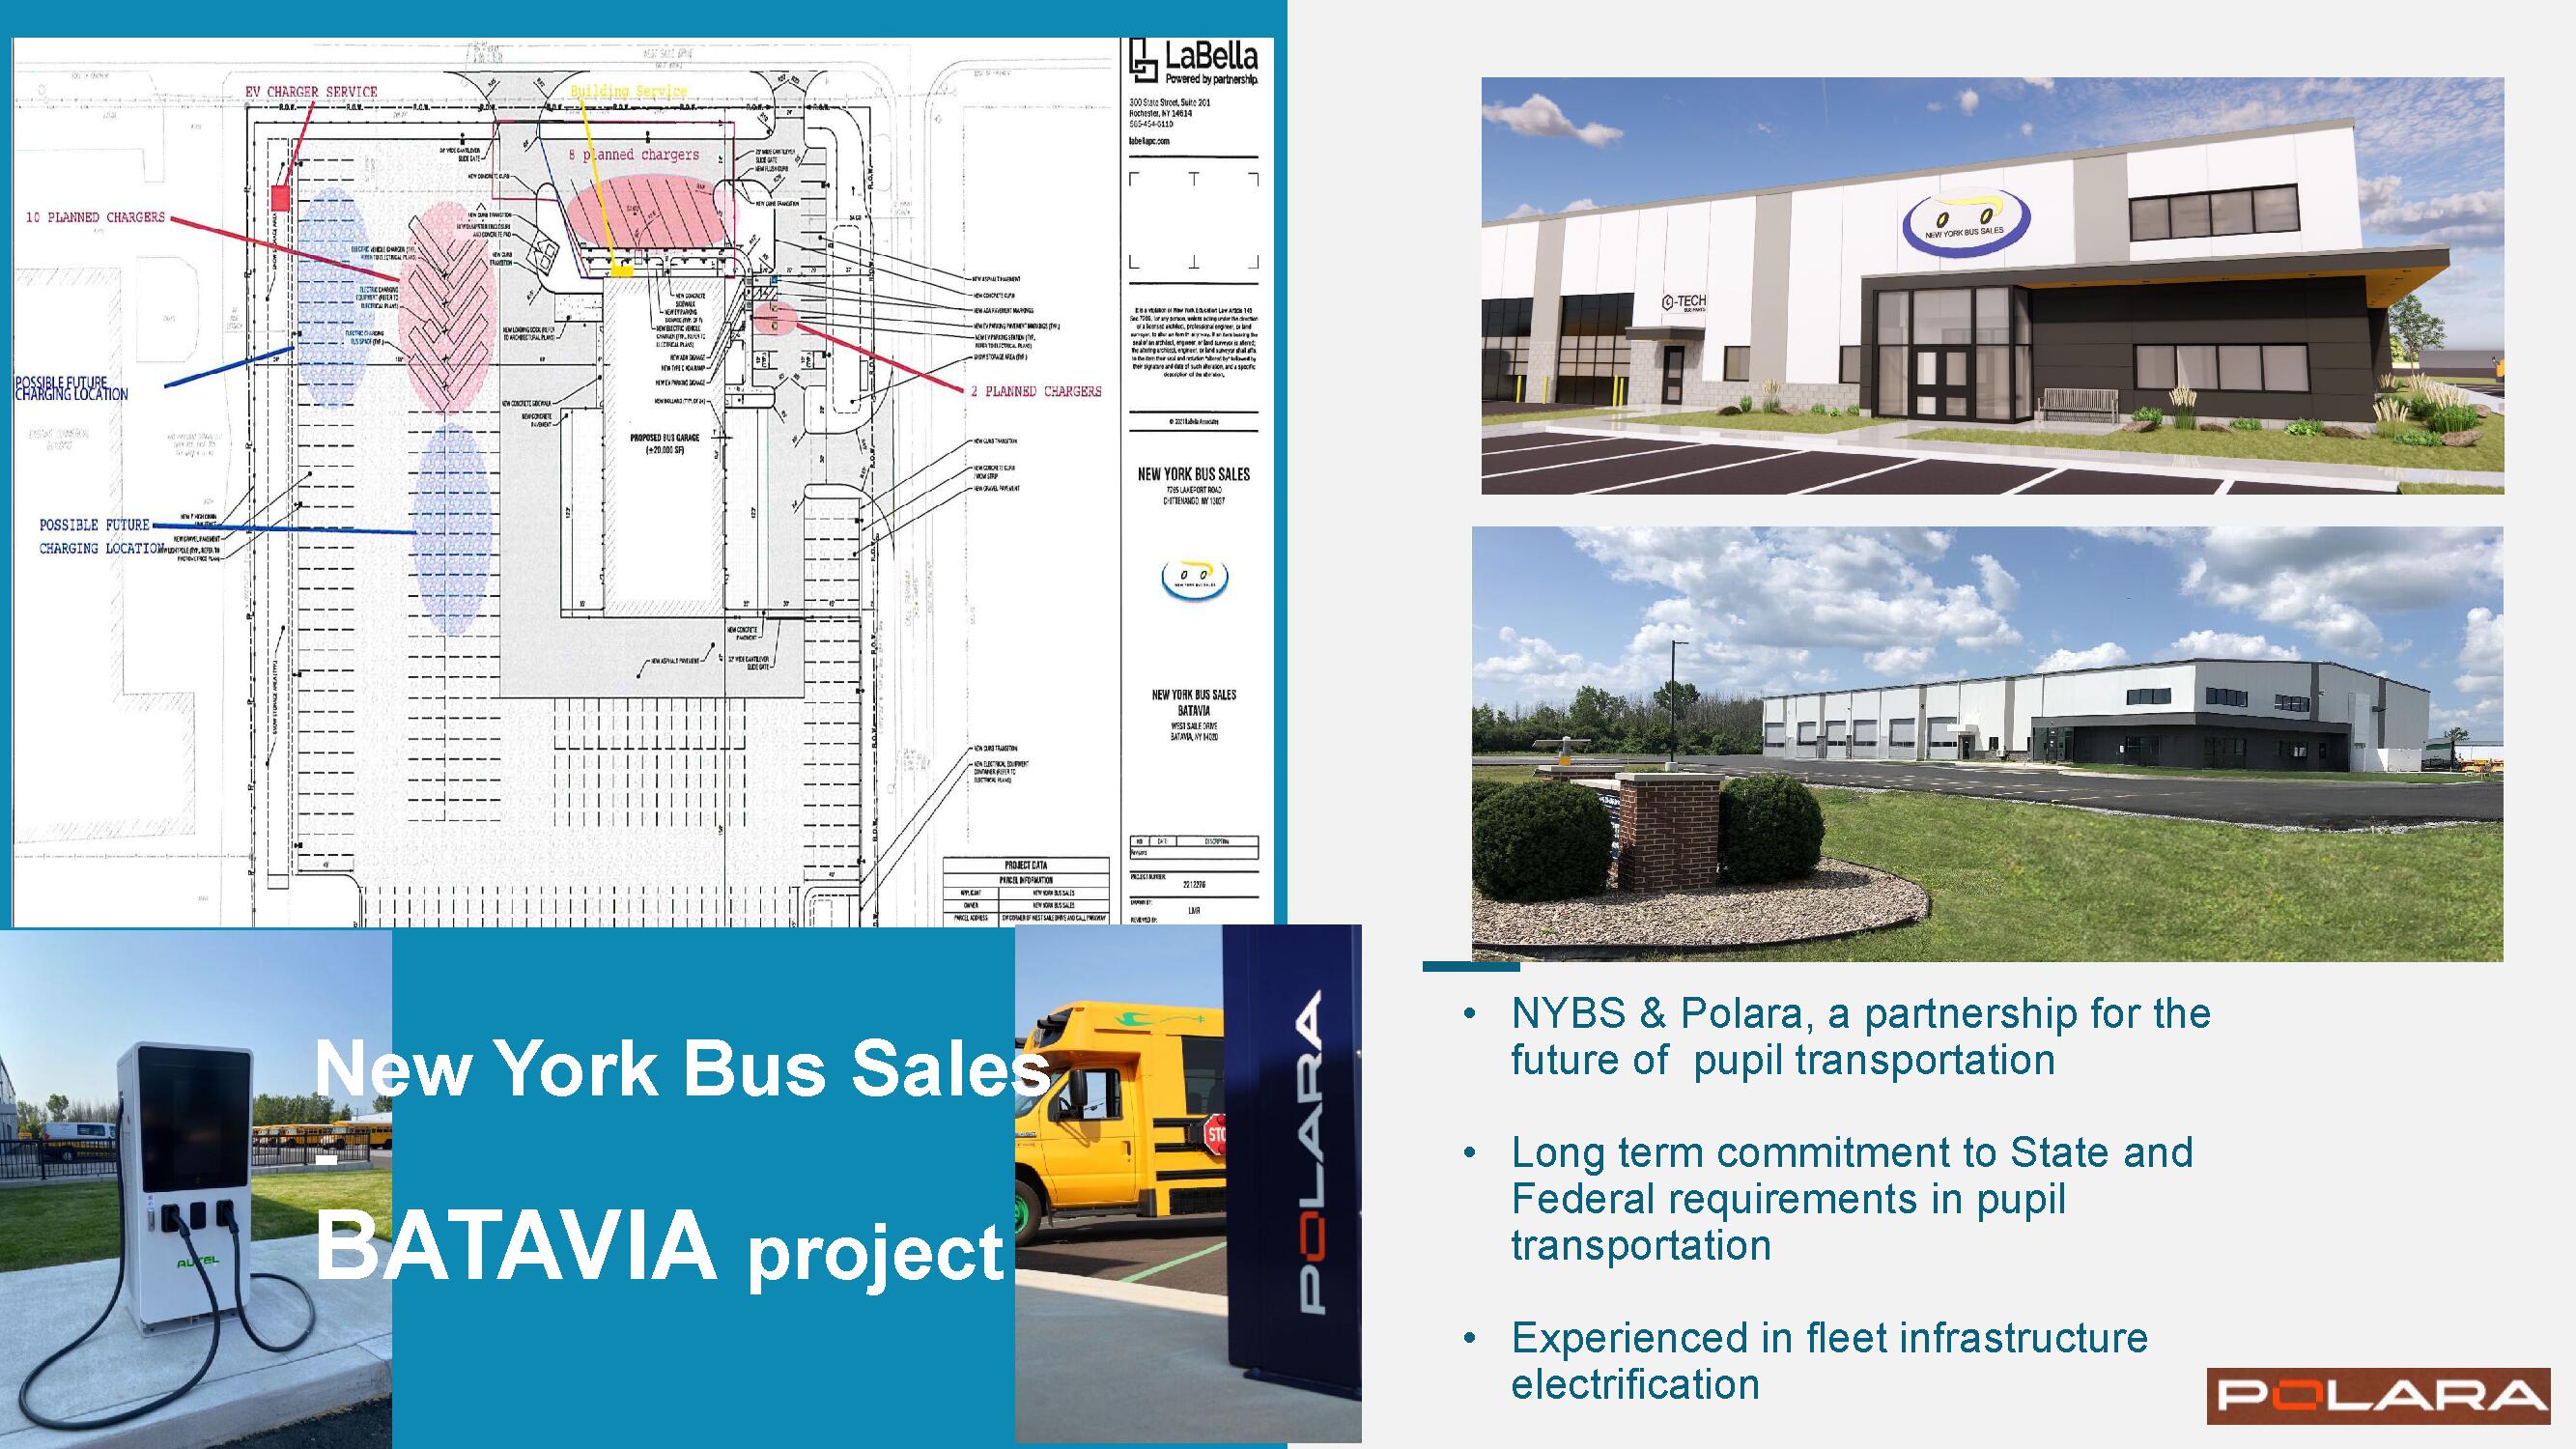 New York Bus Sales Batavia Project